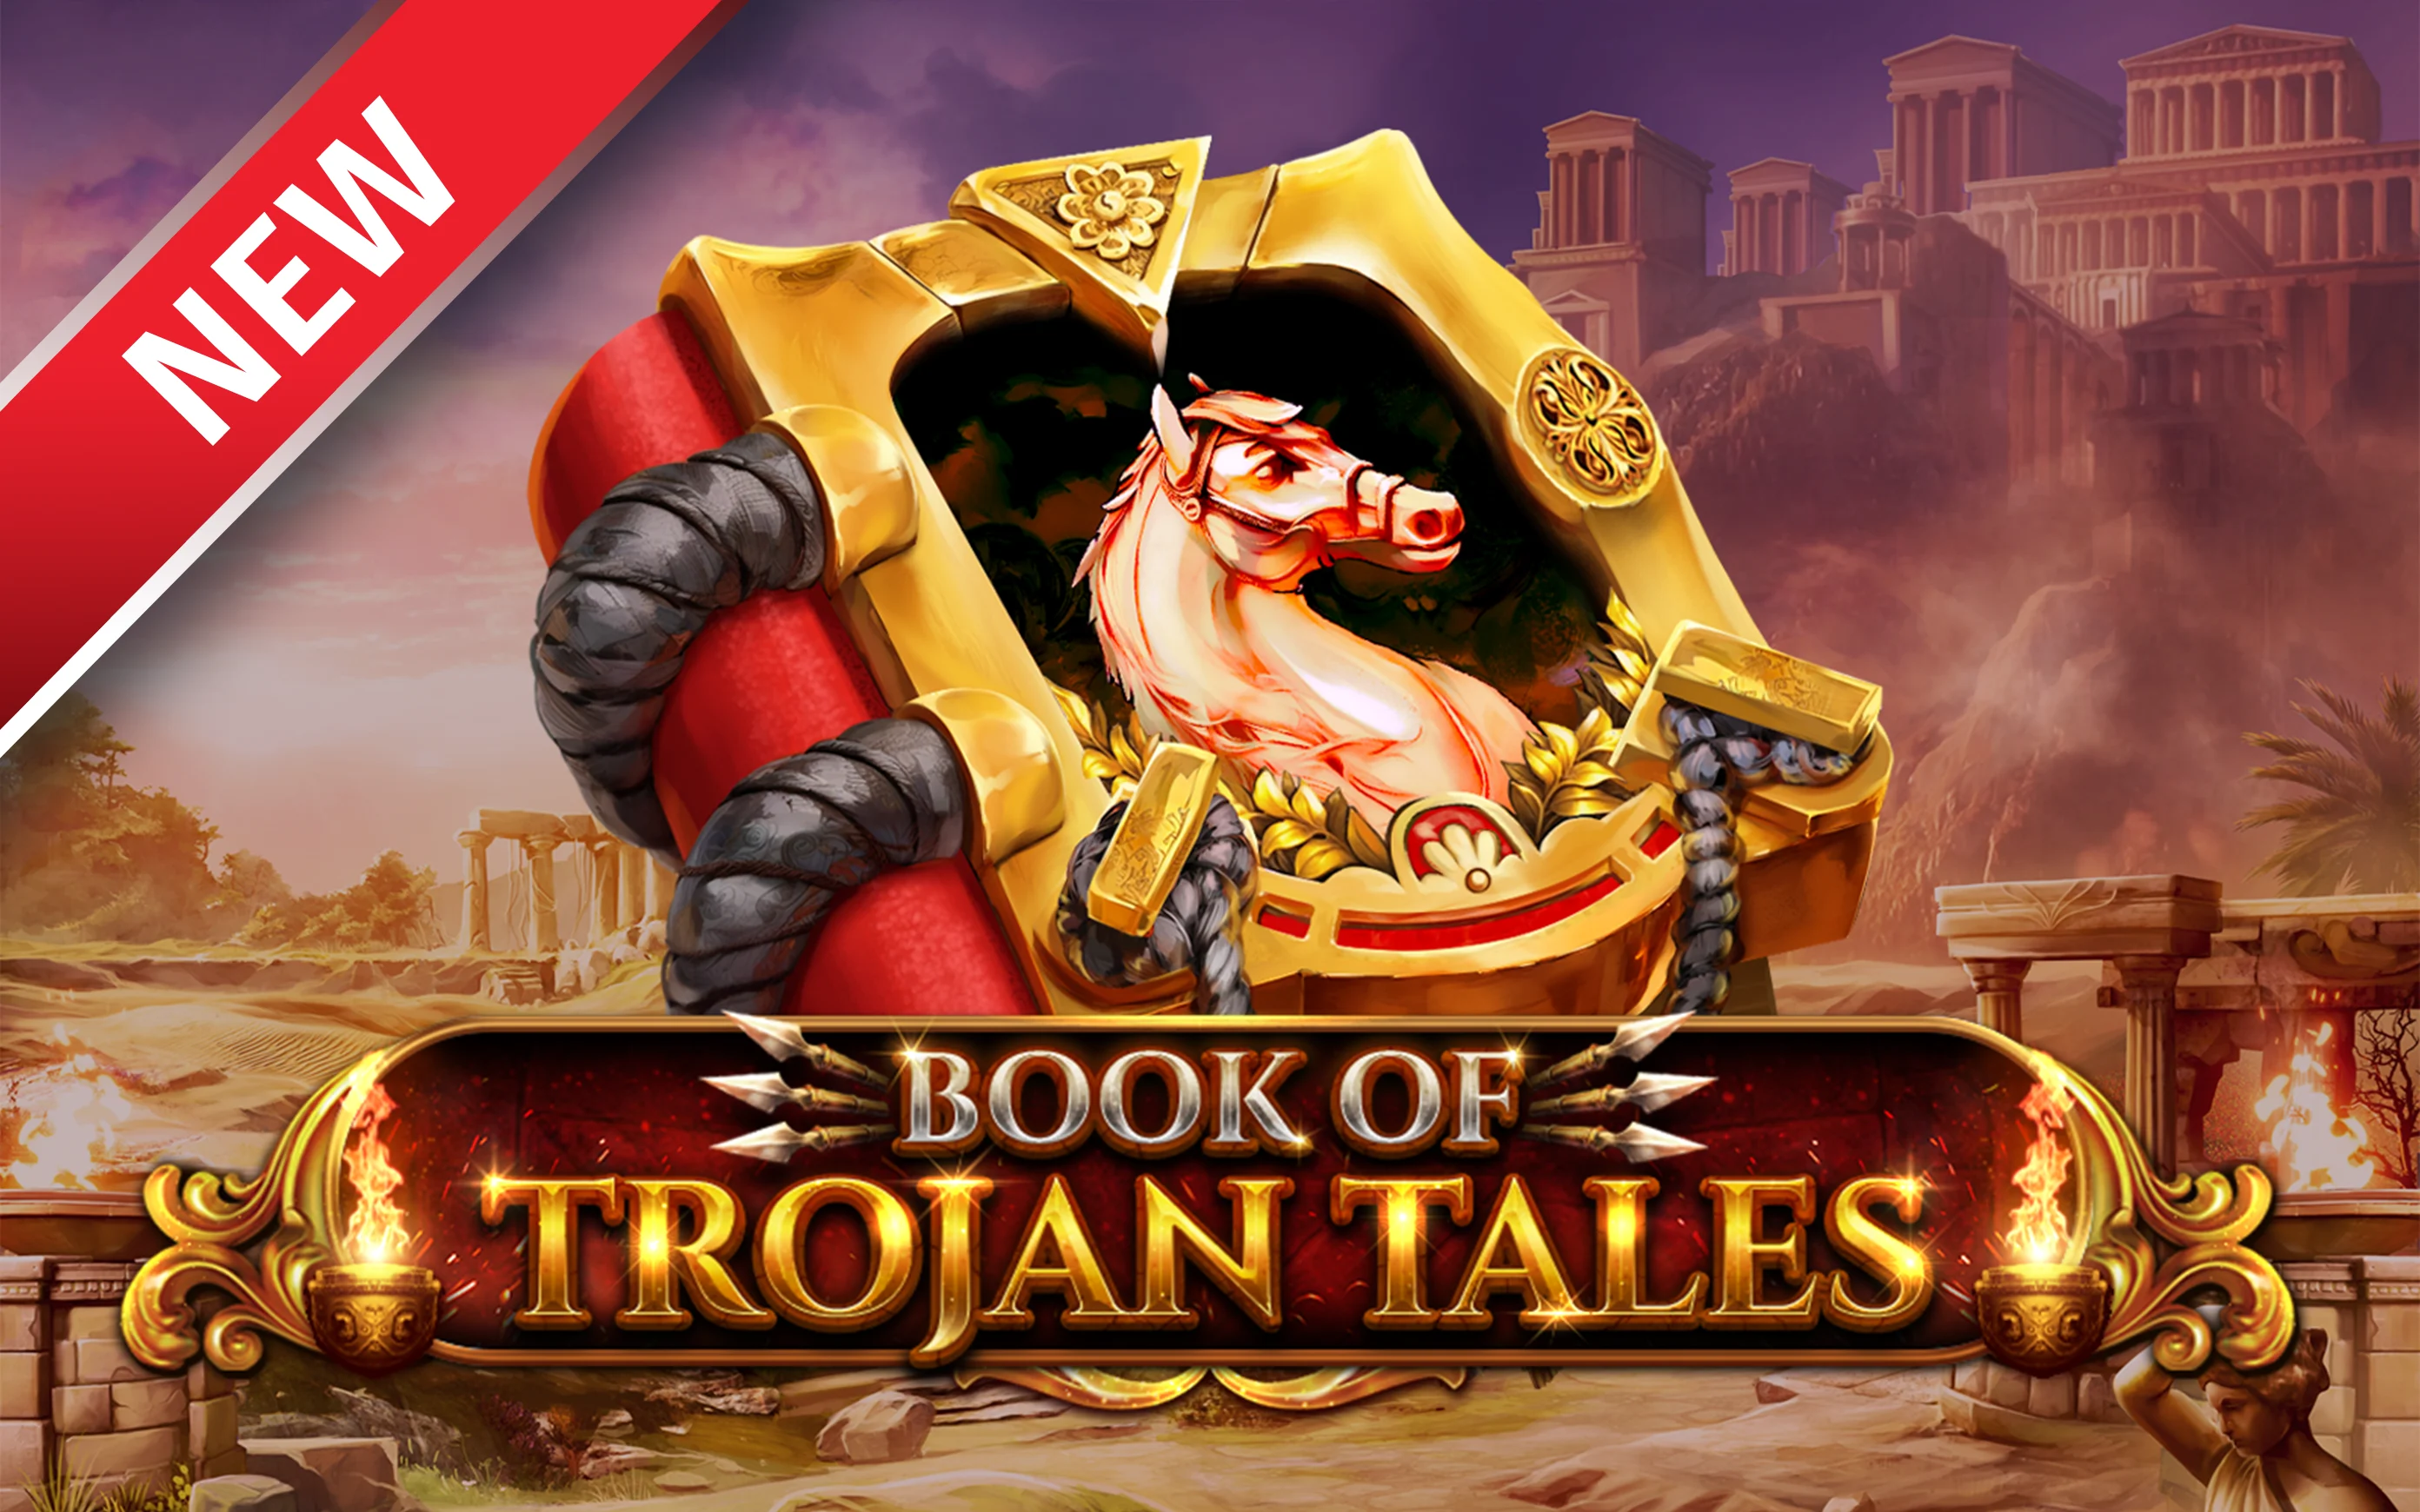 Play Book of Trojan Tales on Starcasino.be online casino